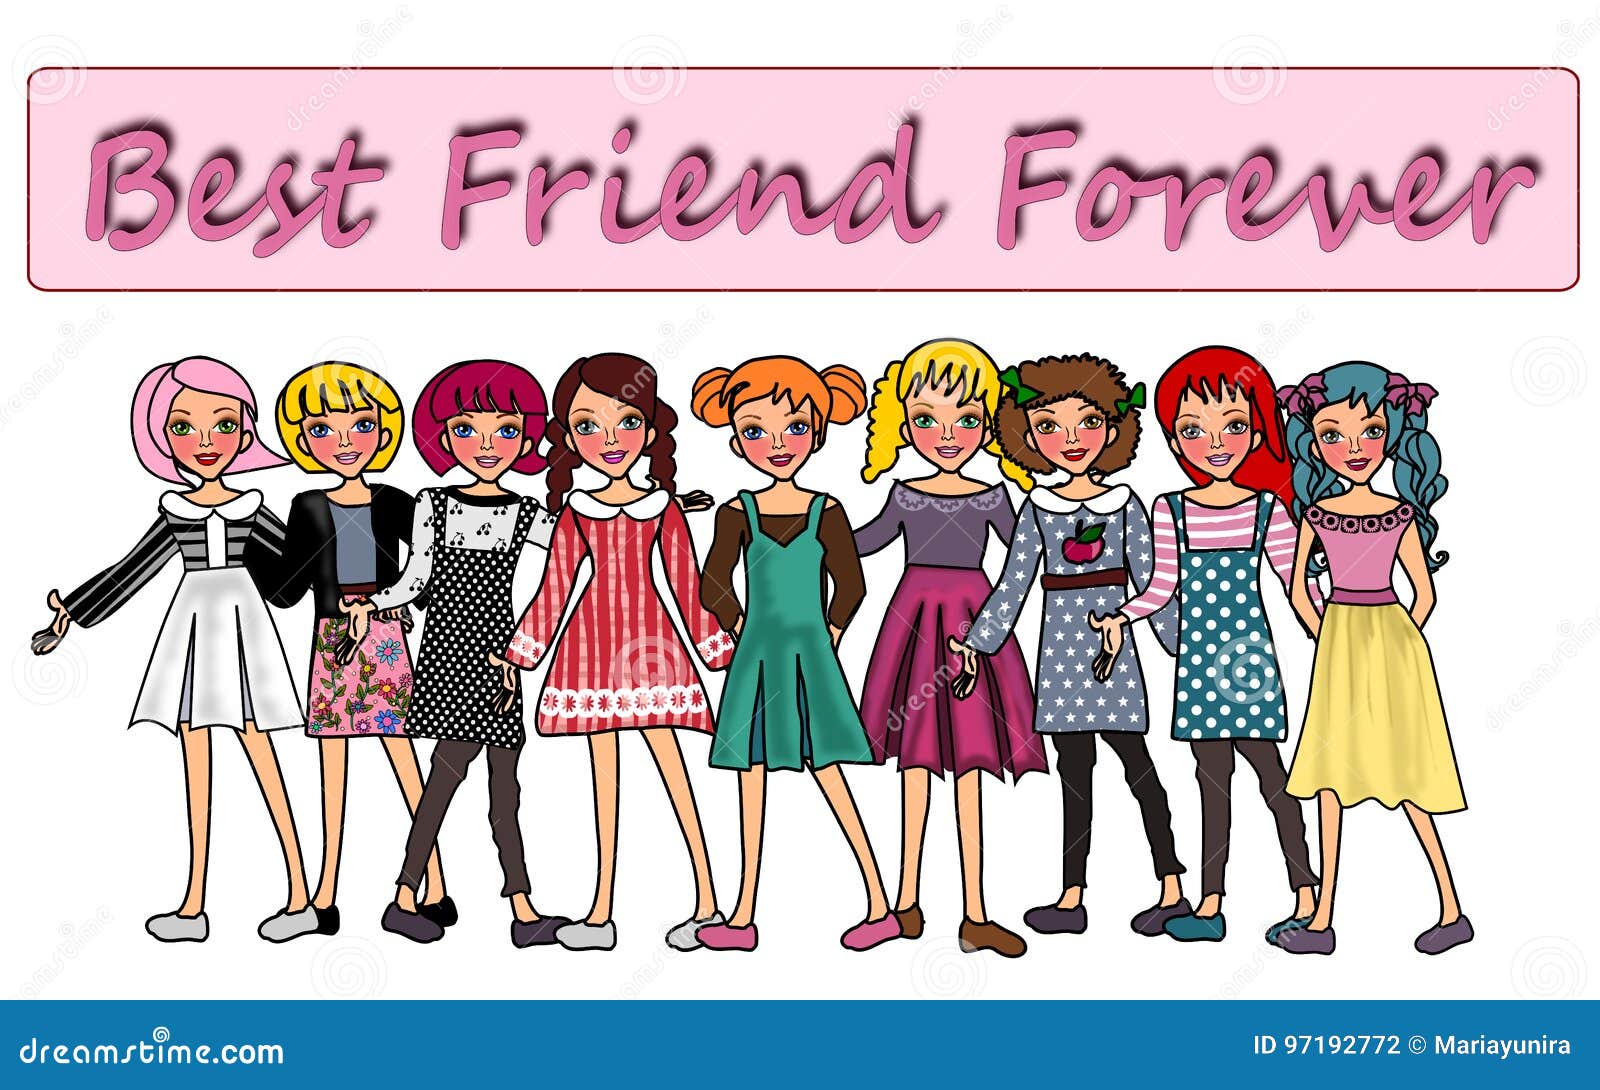 Best friend Forever stock illustration. Illustration of doodles - 97192772